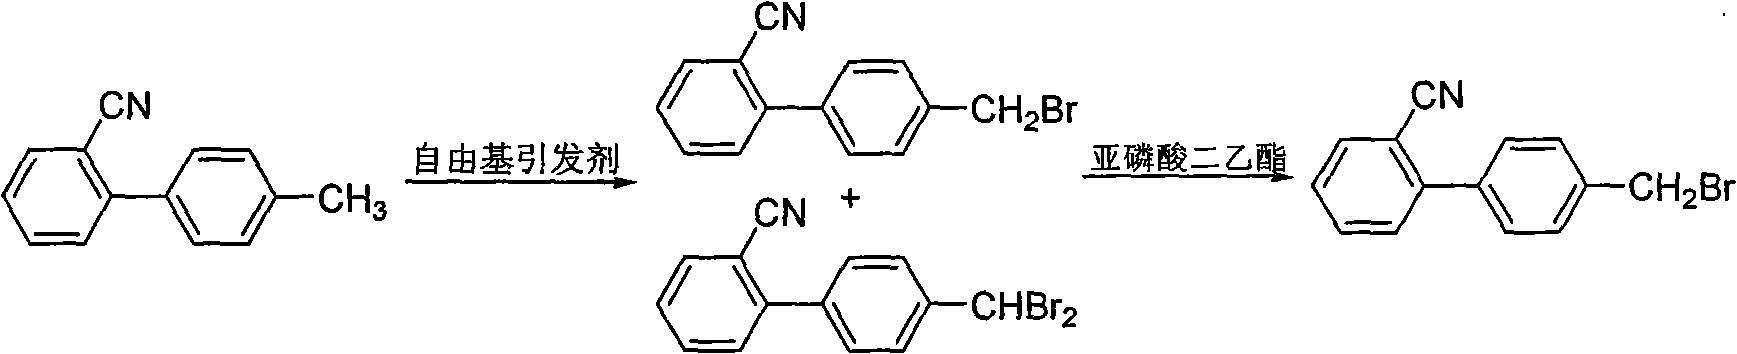 Synthesis method of 4'-Bromomethyl-2-cyanobiphenyl